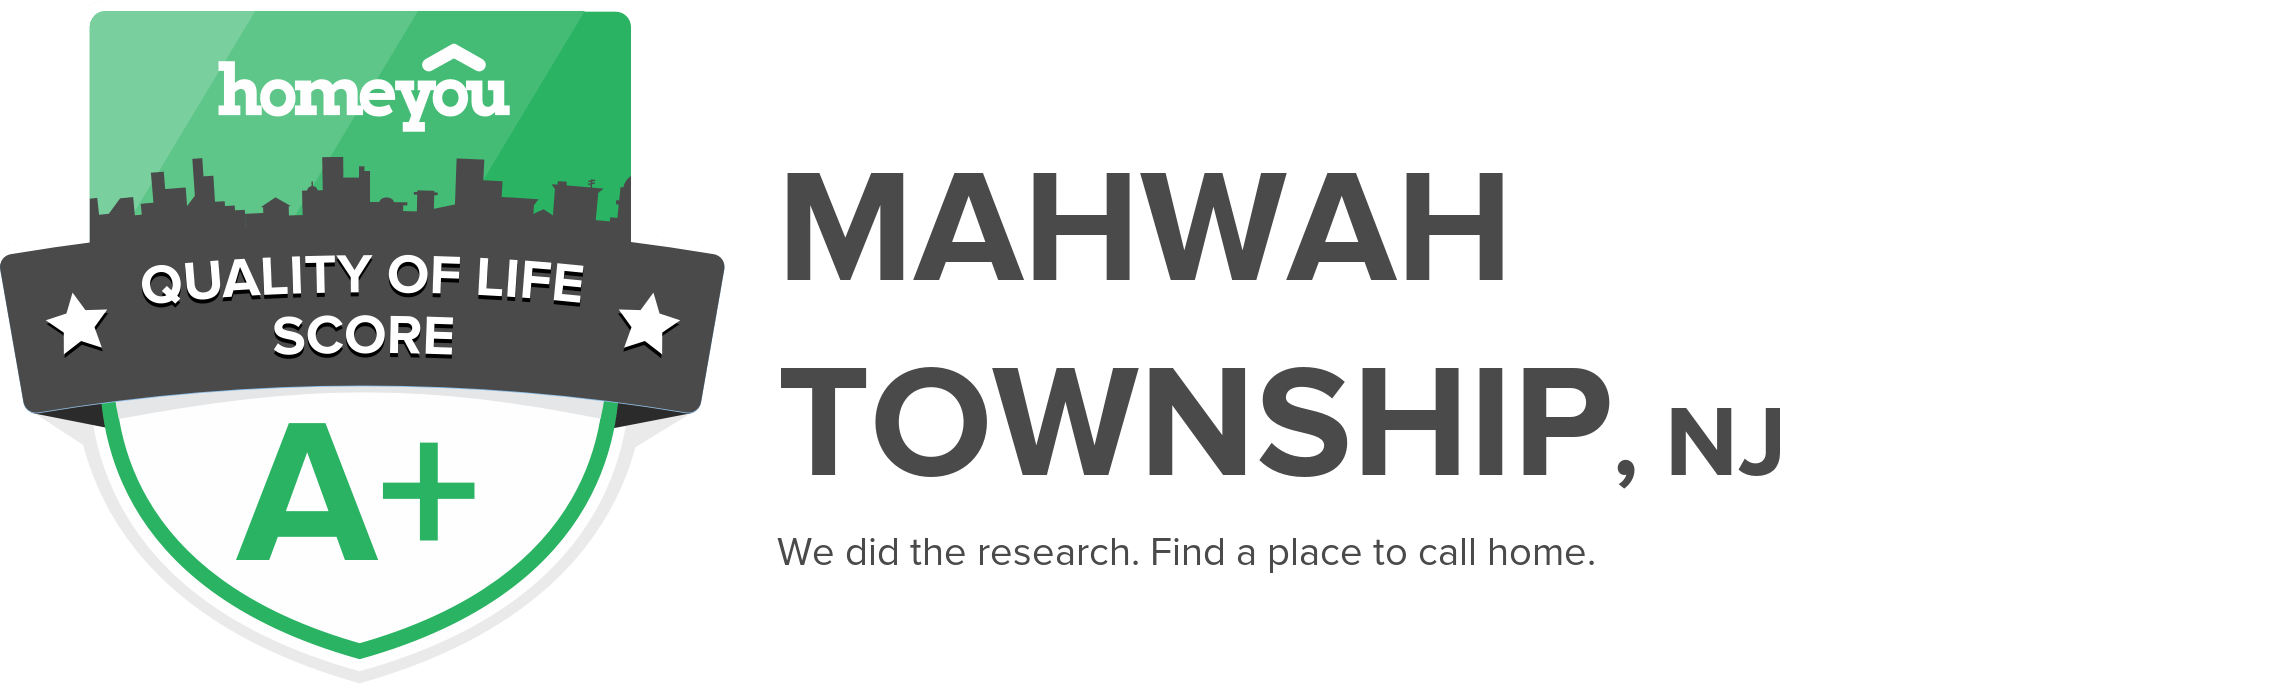 Mahwah Township, NJ